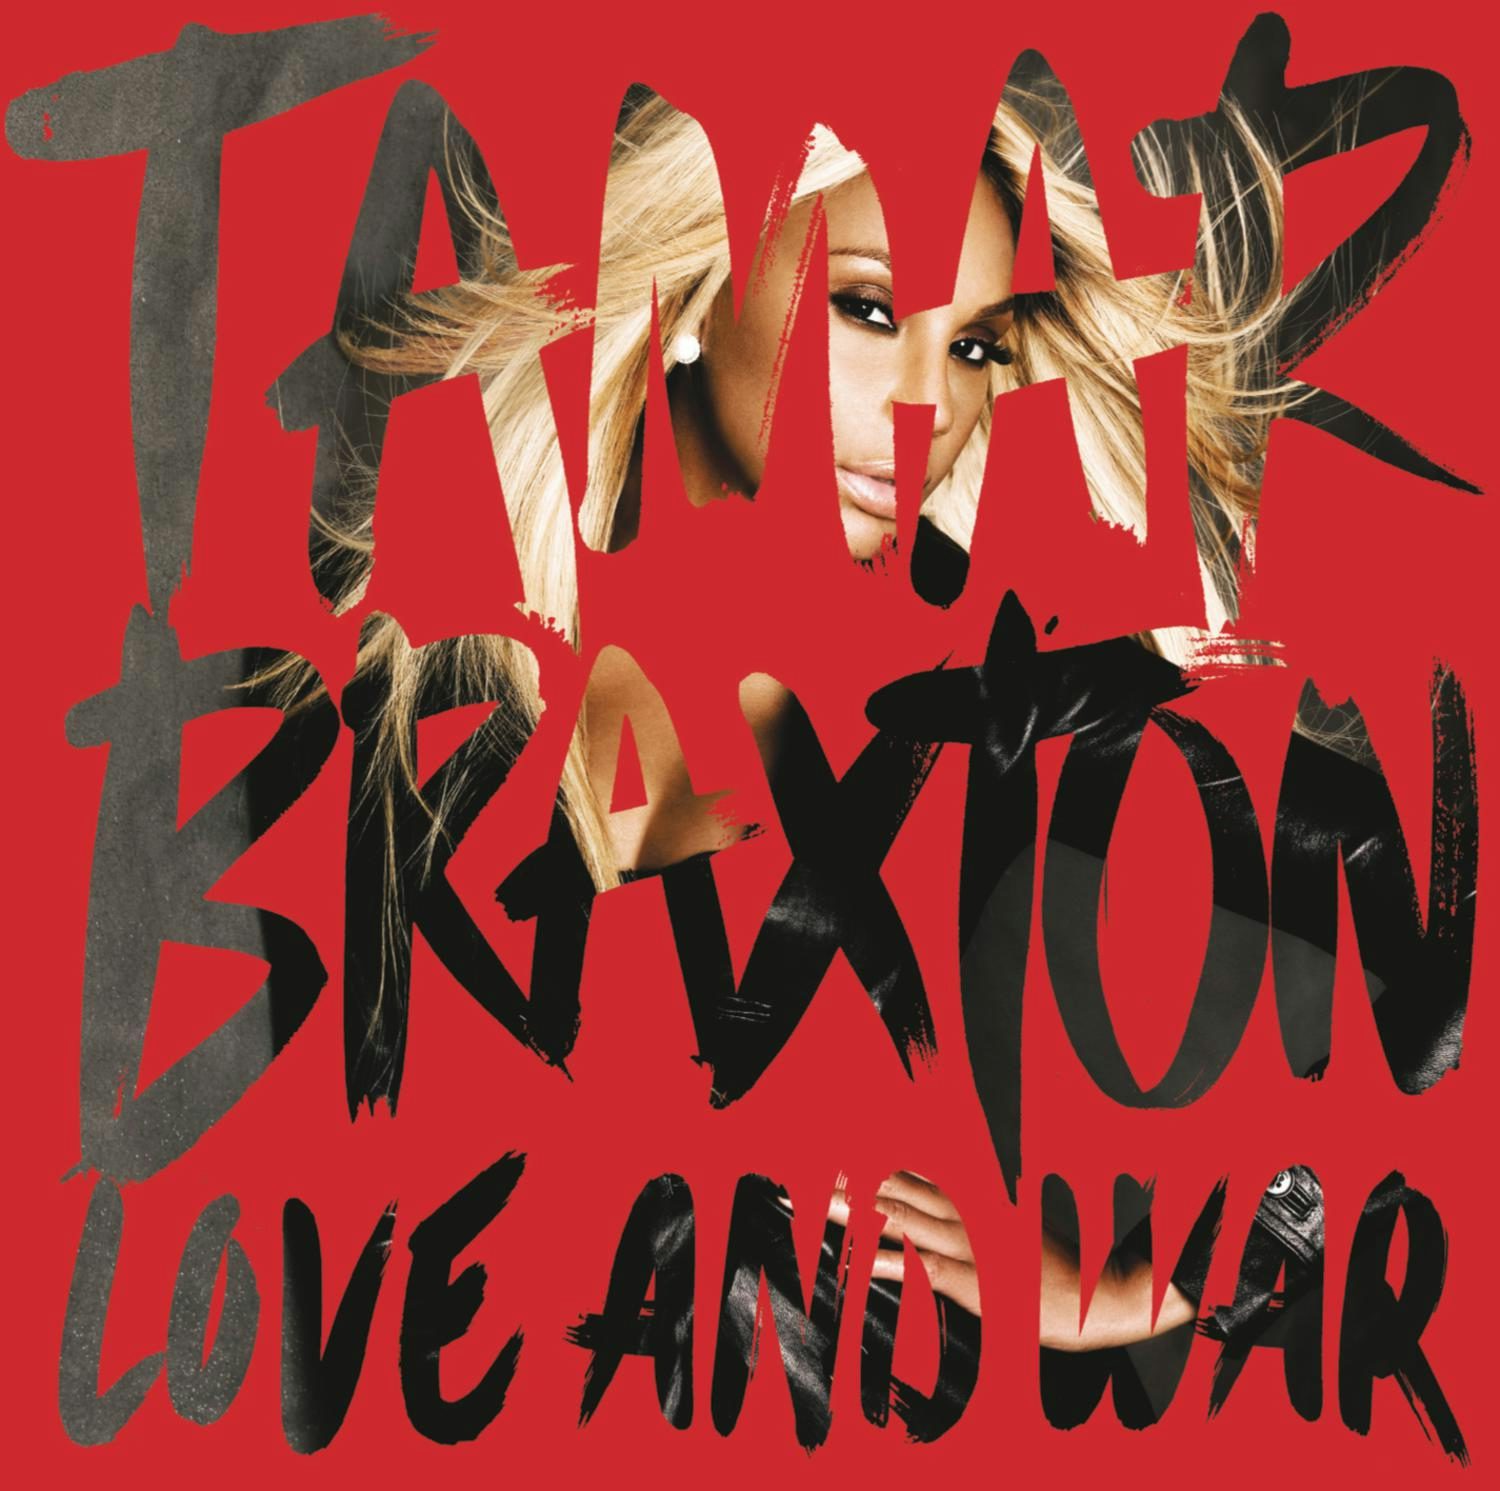 tamar braxton love and war album free mp3 download